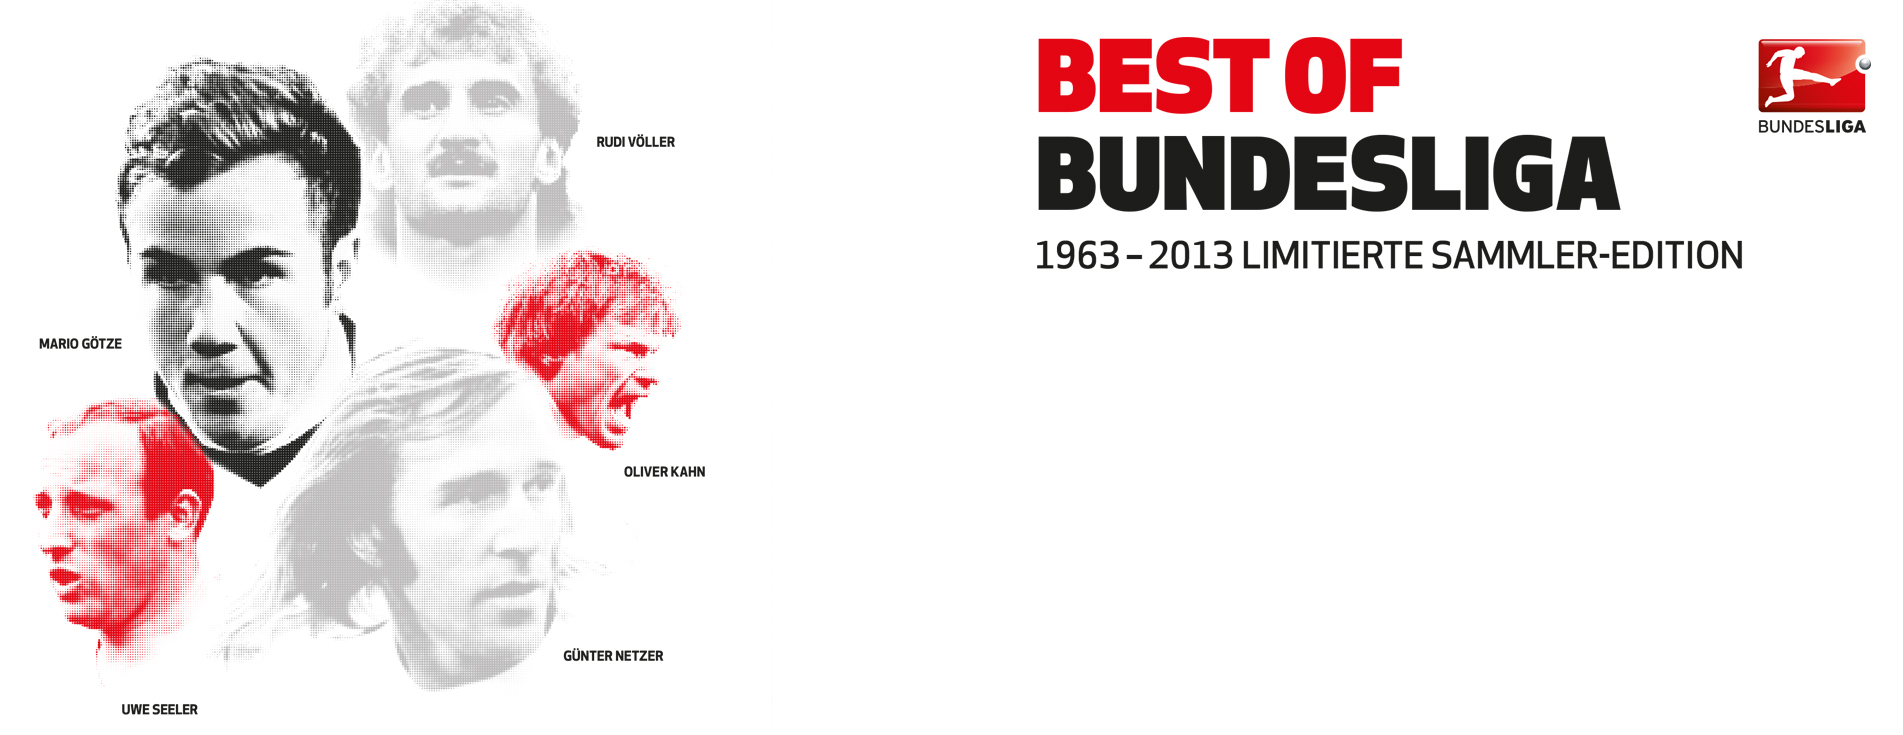 Best of Bundesliga 1963-2013